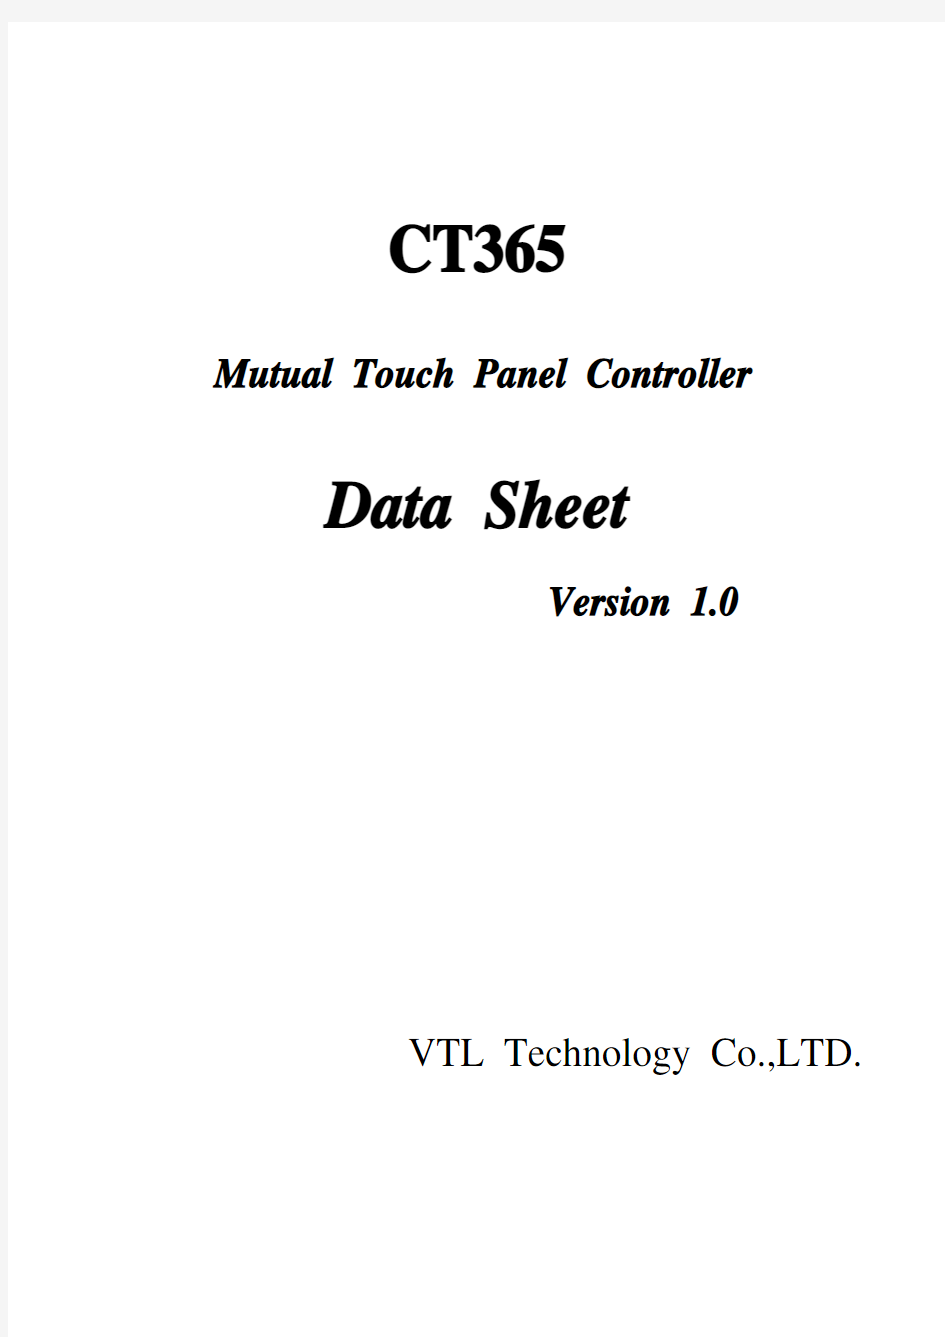 CT365 DATASHEET_V1.0